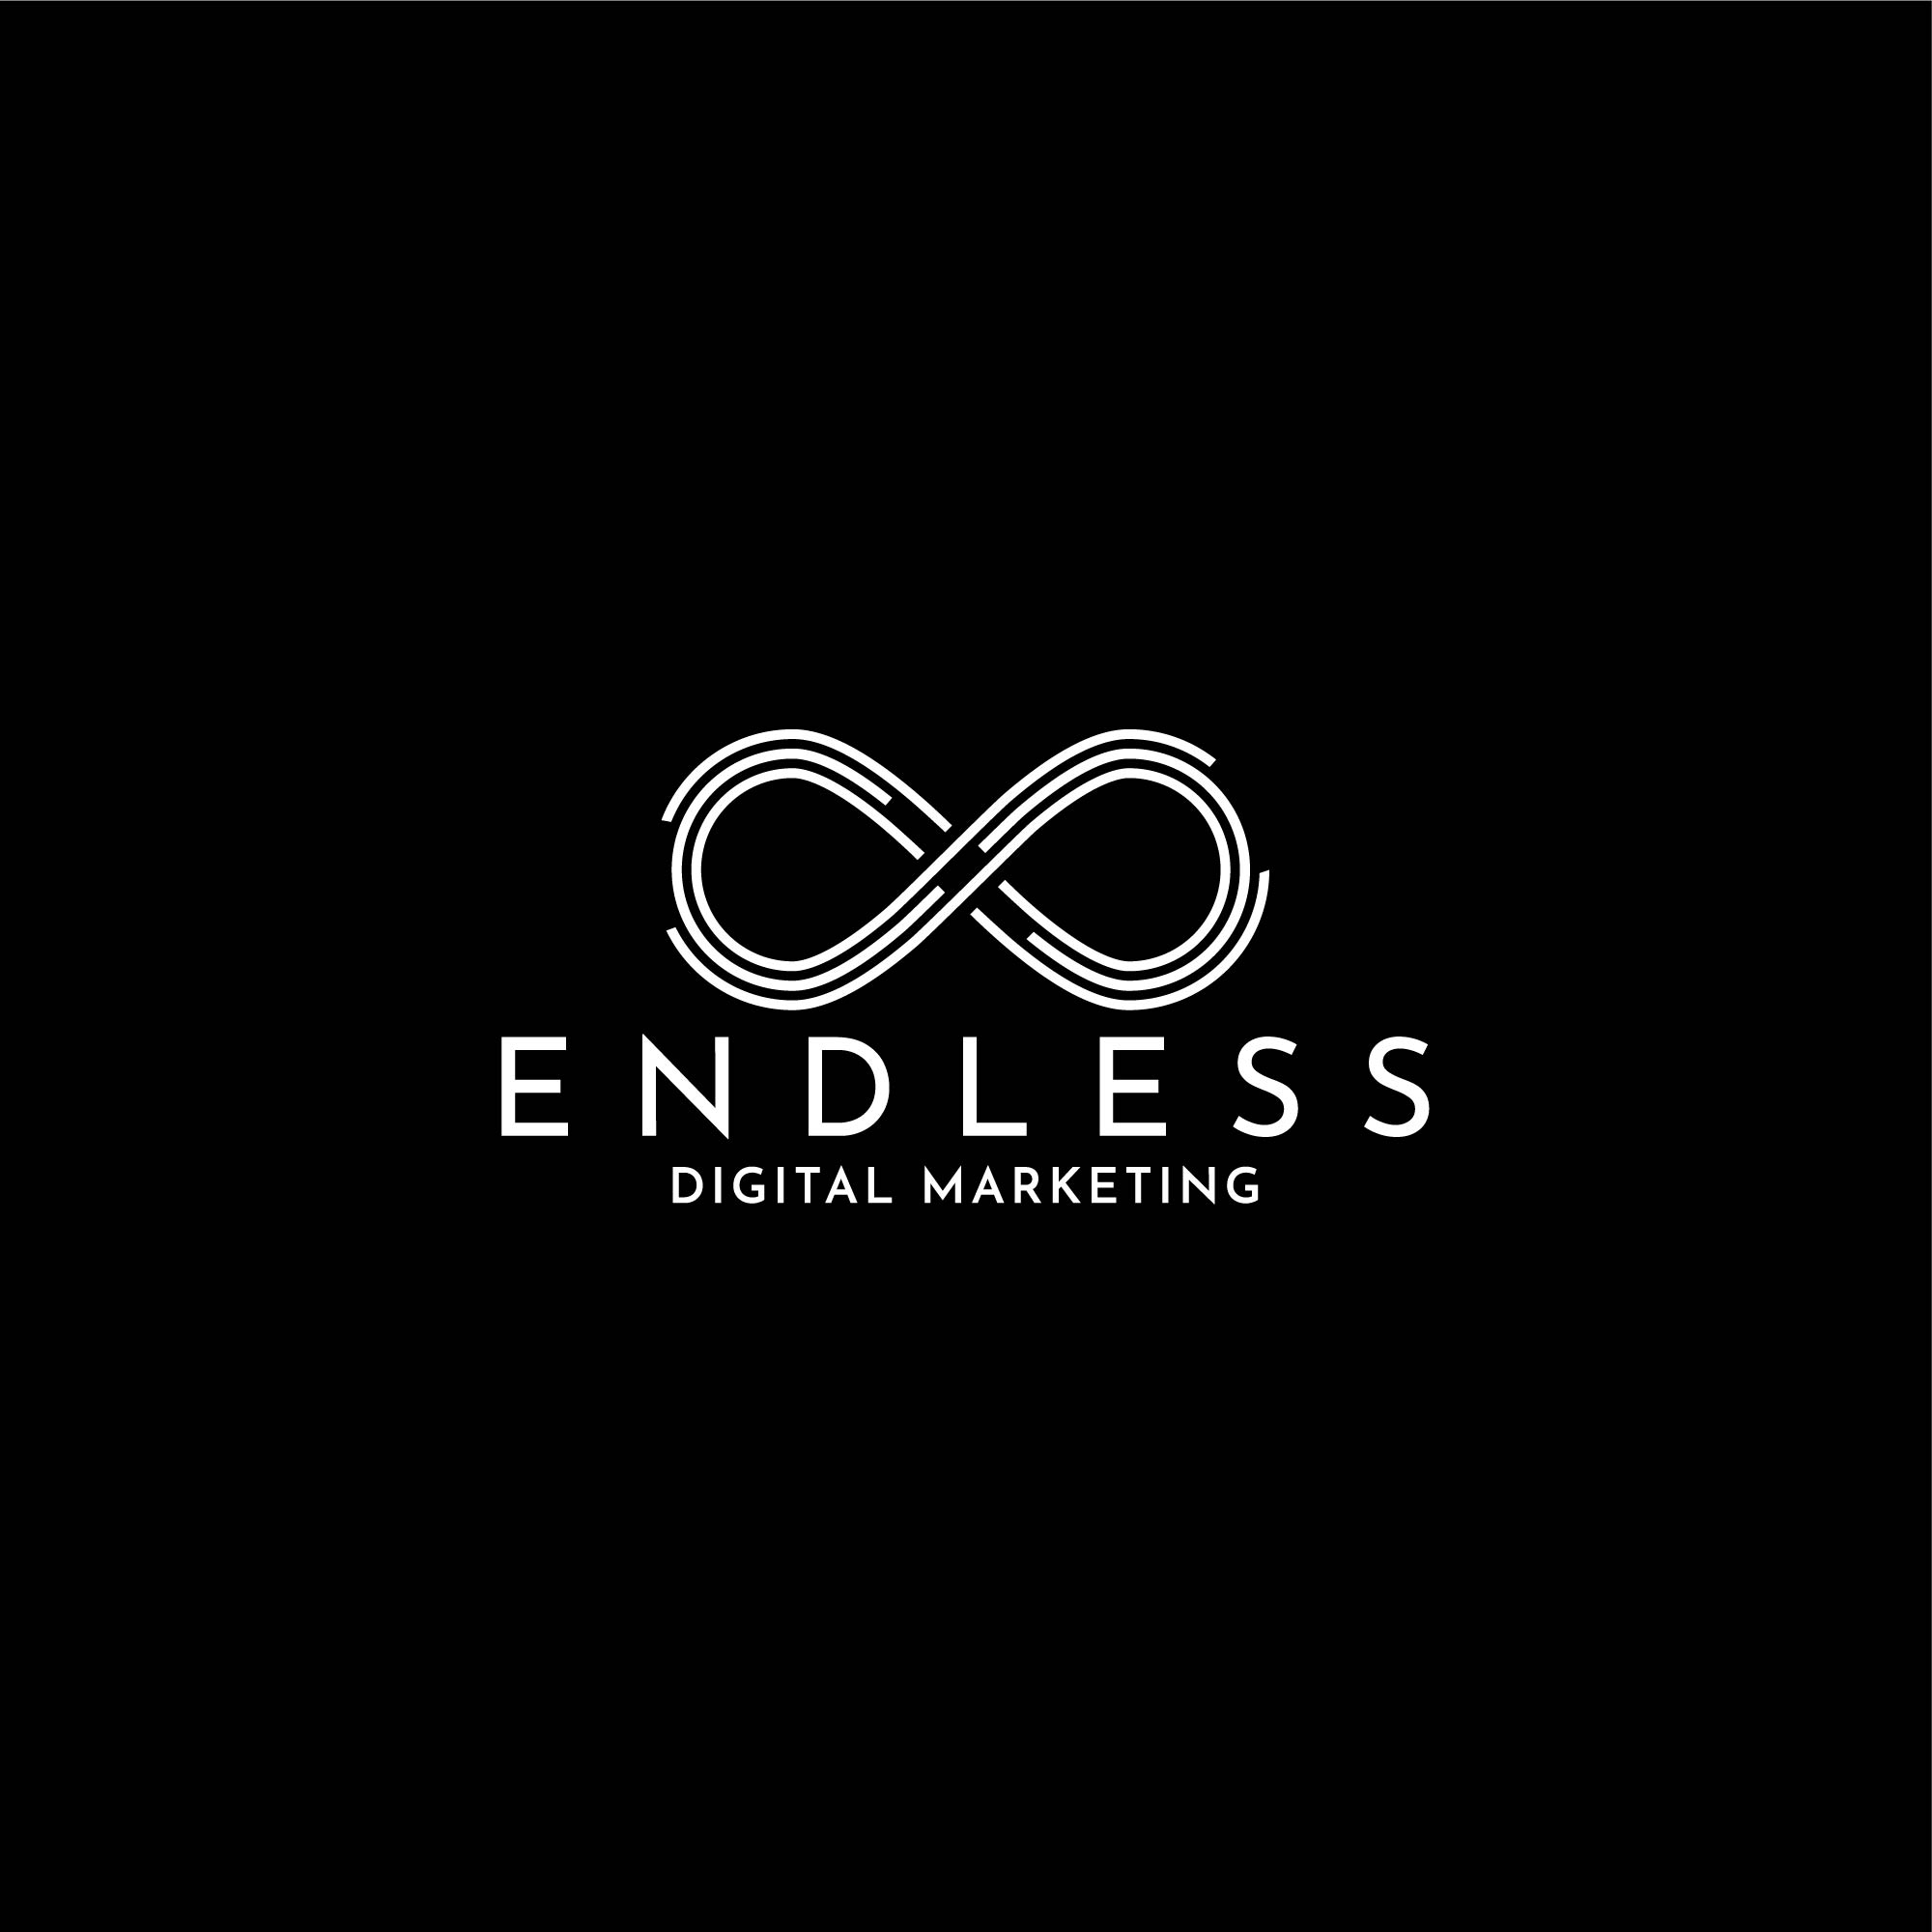 Endless Digital Agency Limited